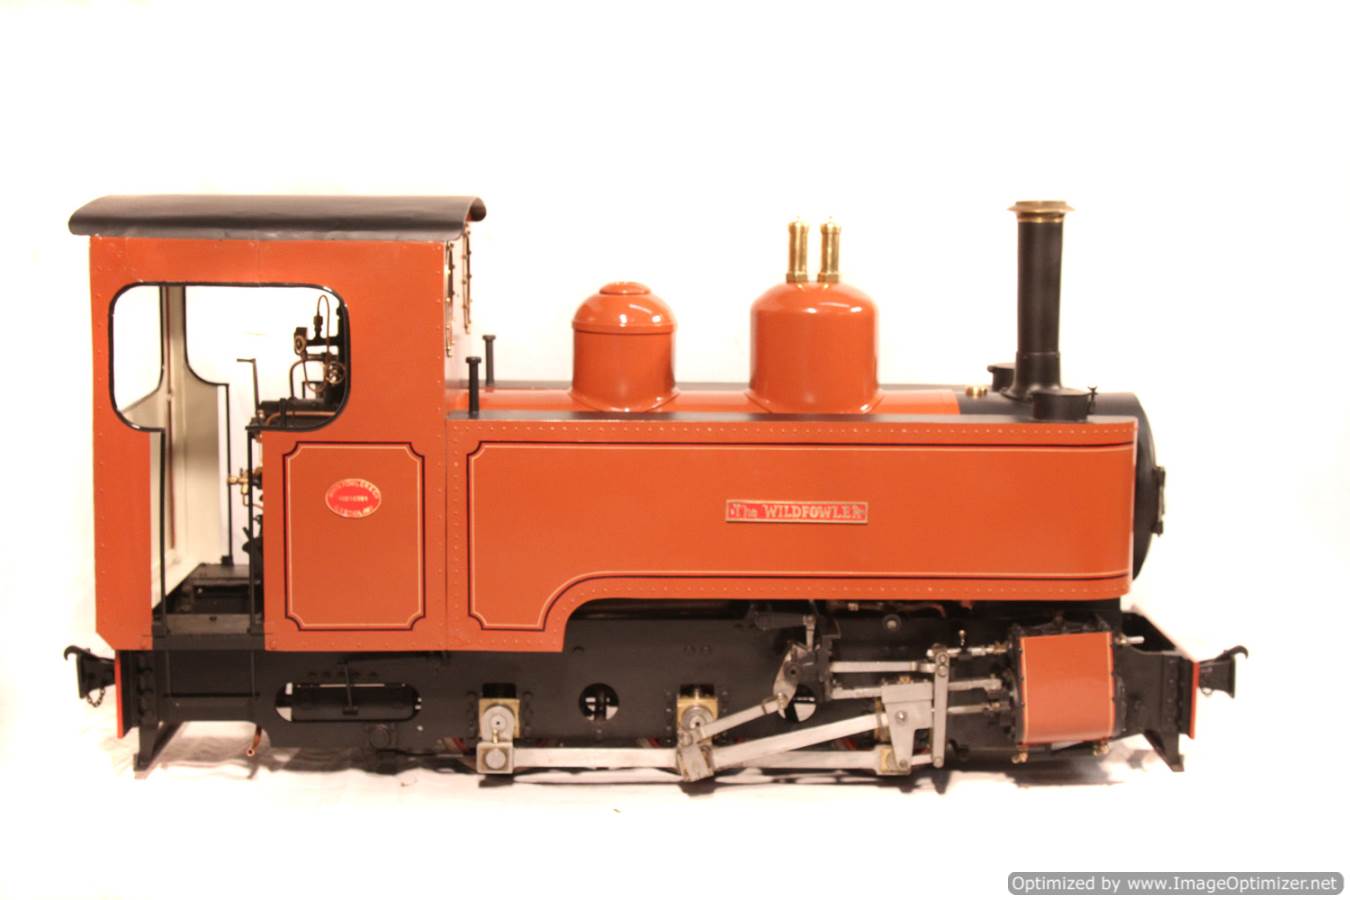 test 5 inch Gauge Fowler Live Steam Locomotive for sale 01 Optimized